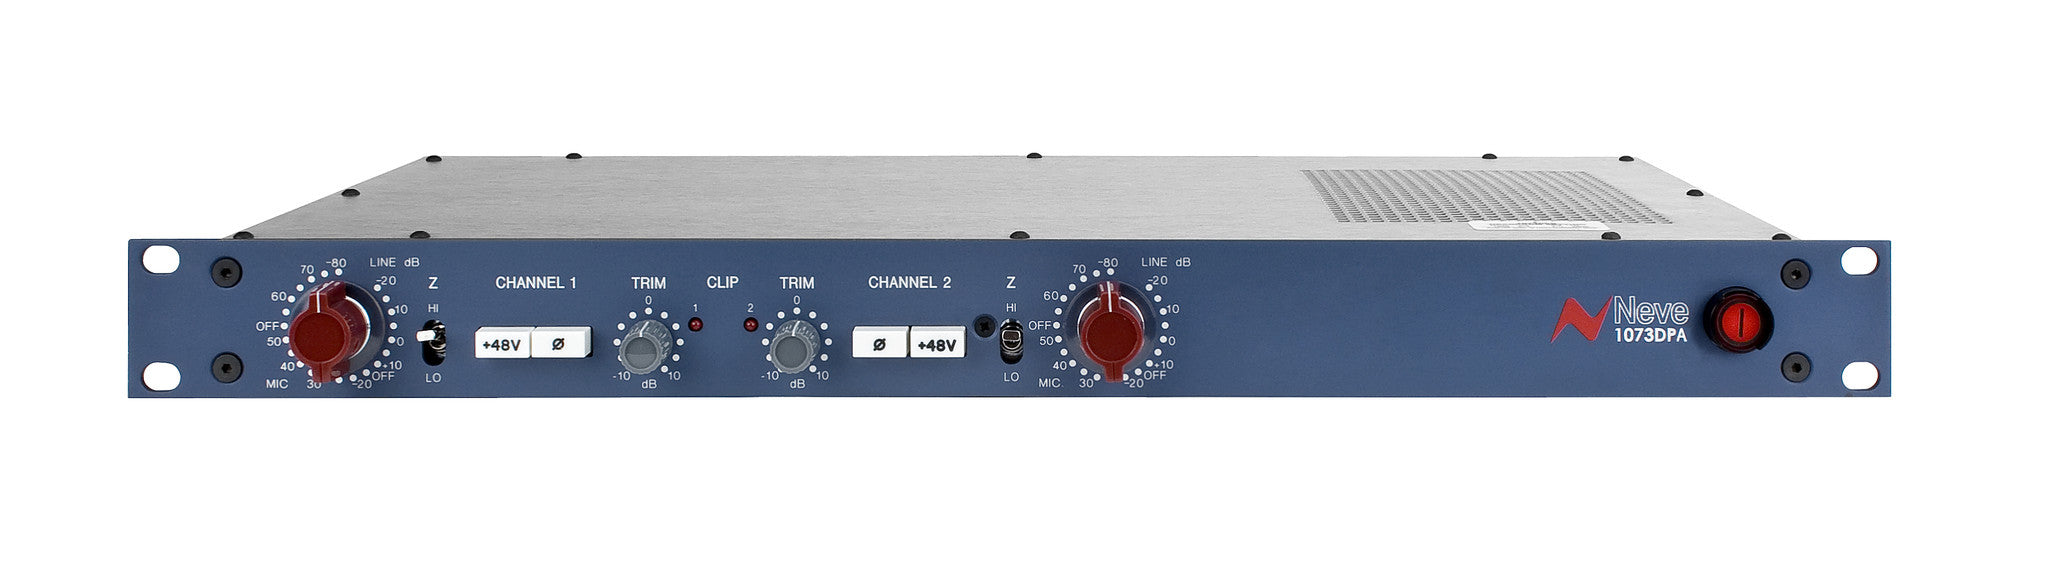 Recording Equipment - AMS Neve - AMS Neve 1073DPA - Professional Audio Design, Inc